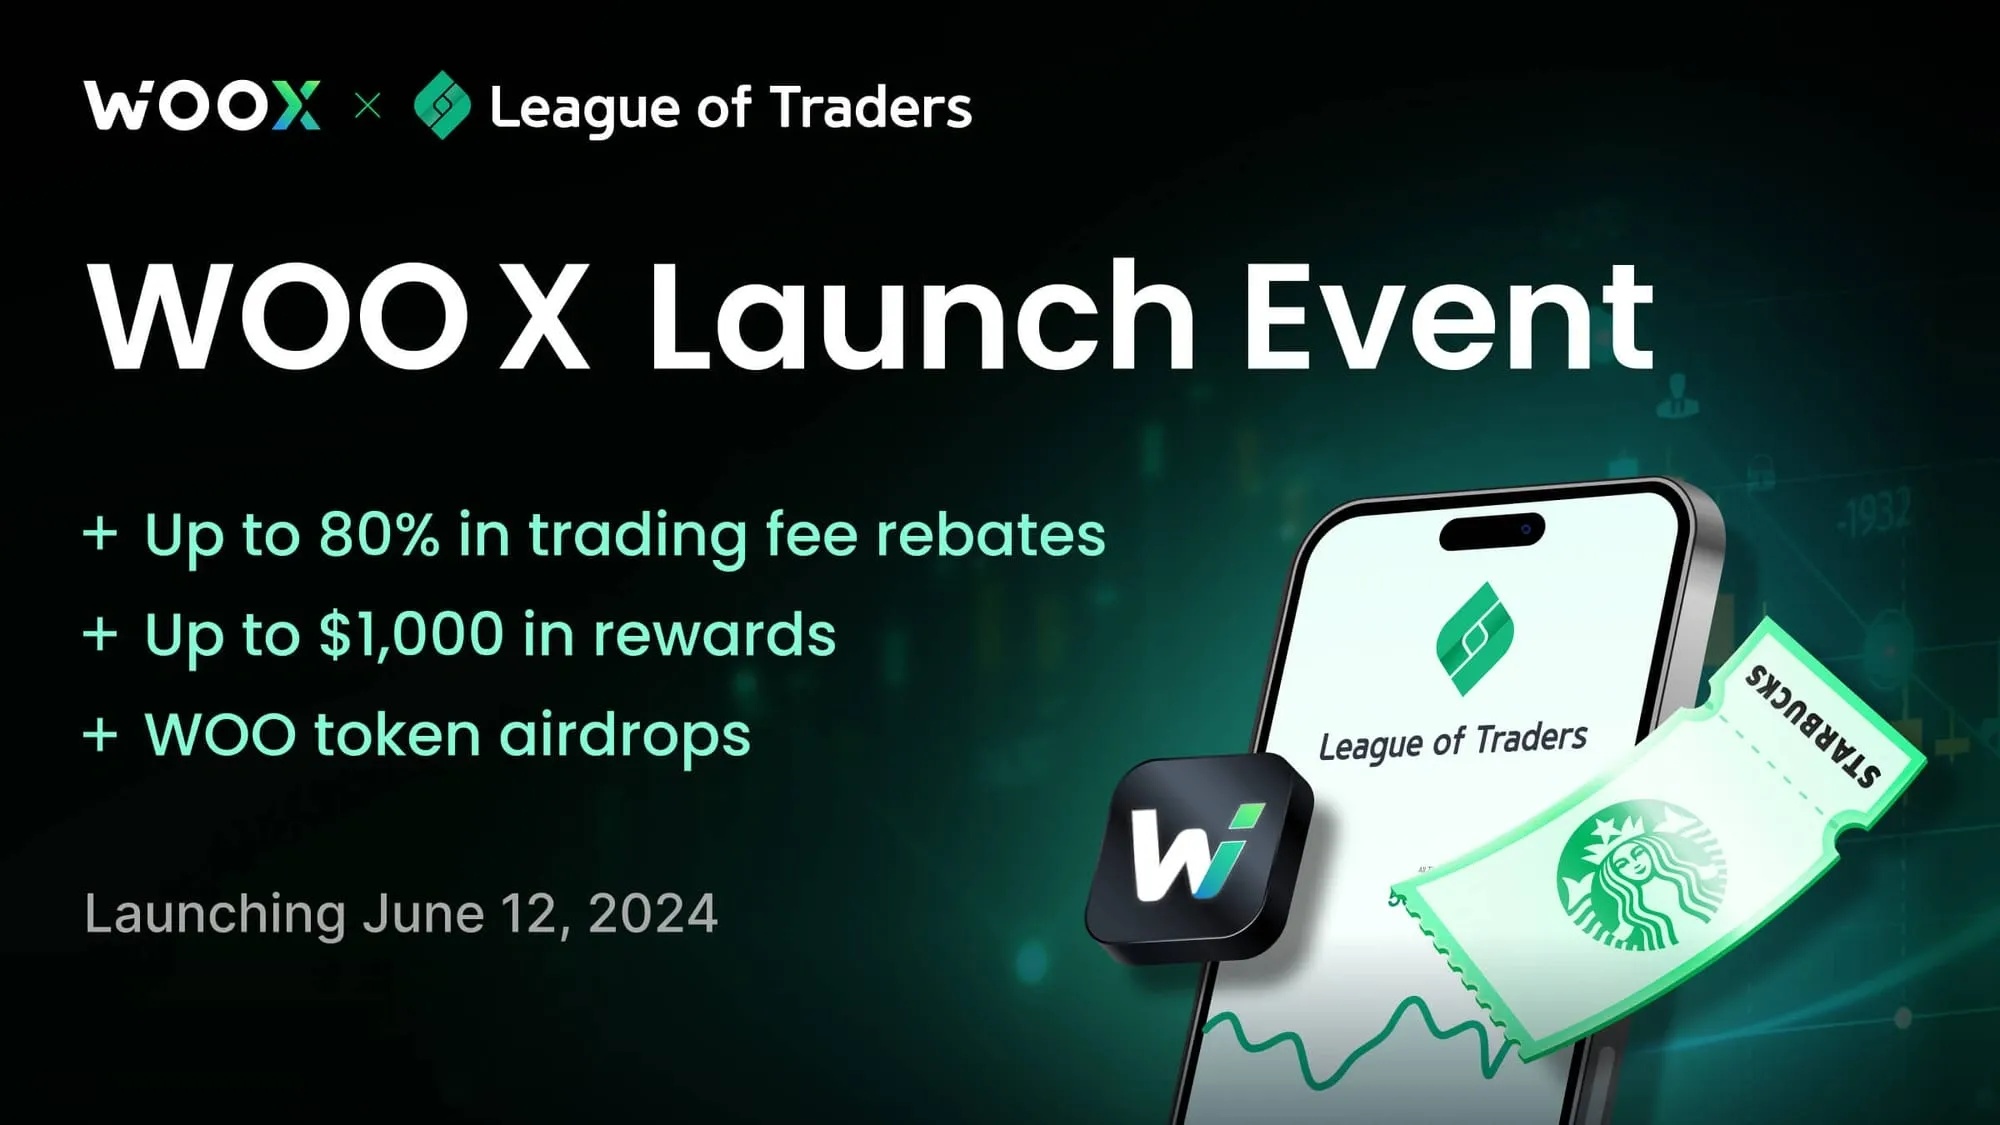 WOO X Global 與 League of Traders 建立策略合作關係